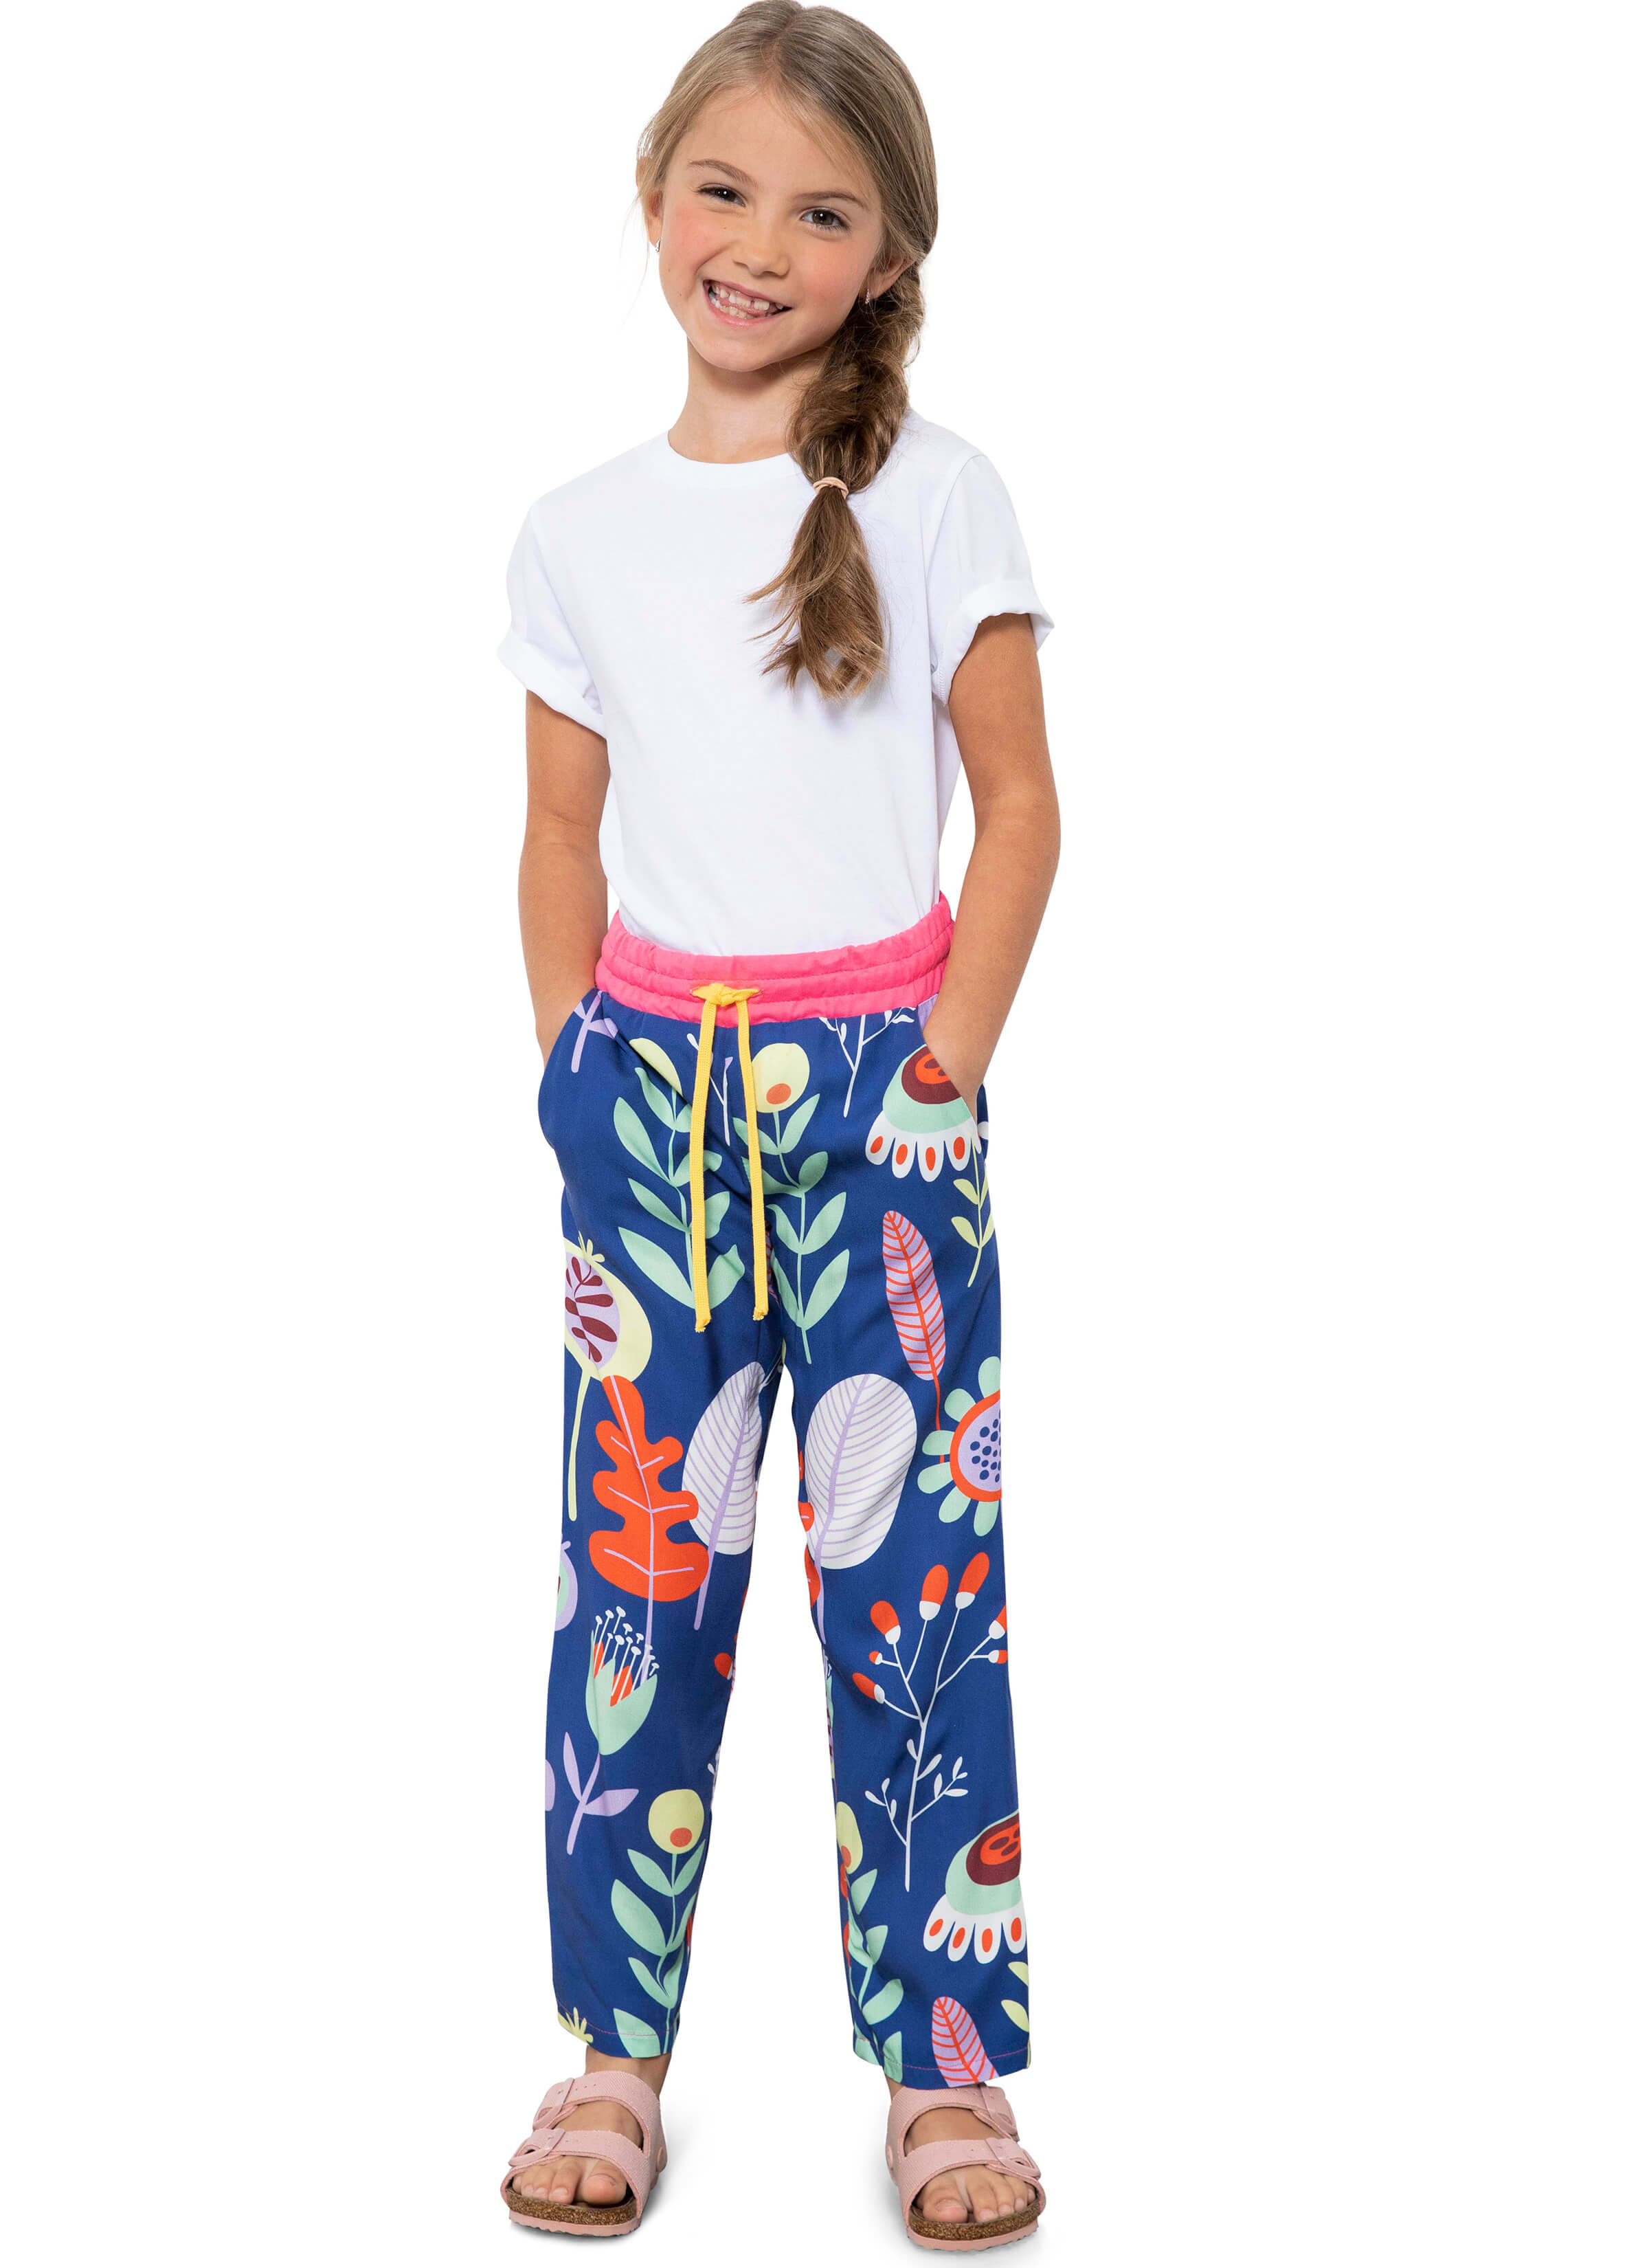 Burda Style Pattern 9228 Children's Trousers